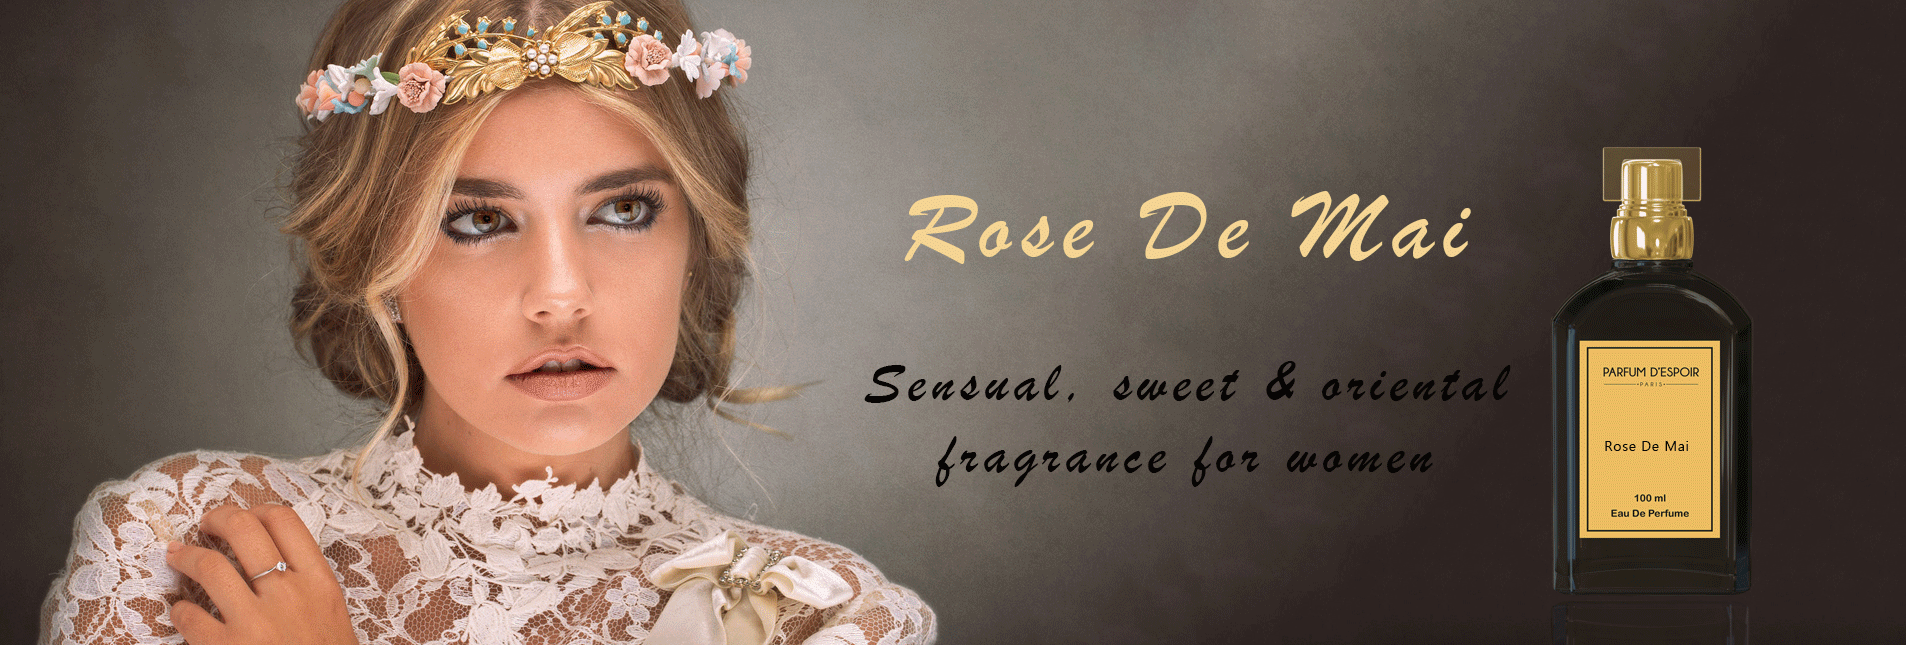 The End - Sweet Floral Perfume - Parfum D'espoir